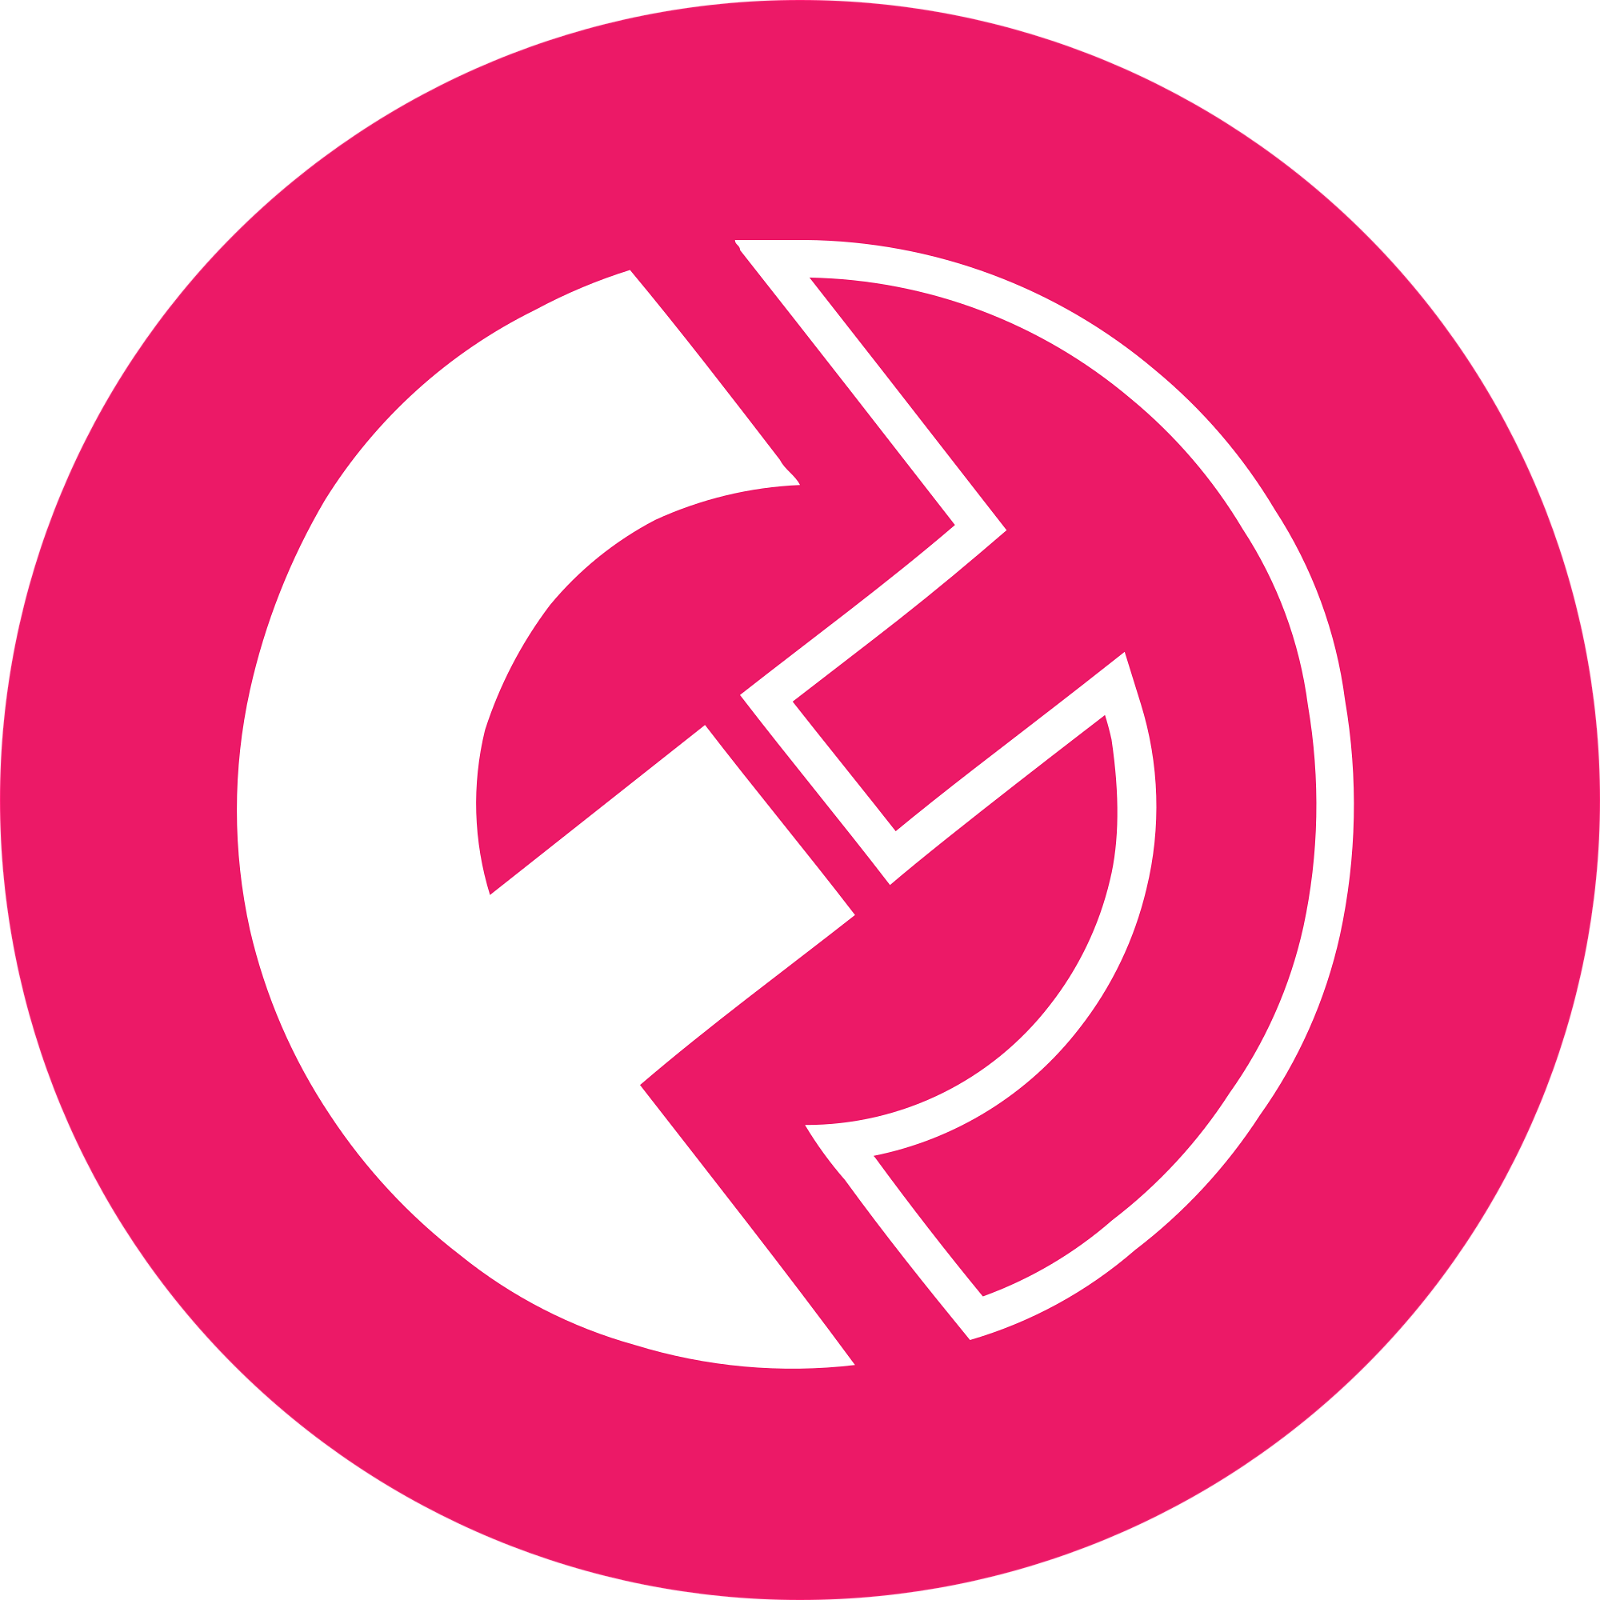 FunFair Logo